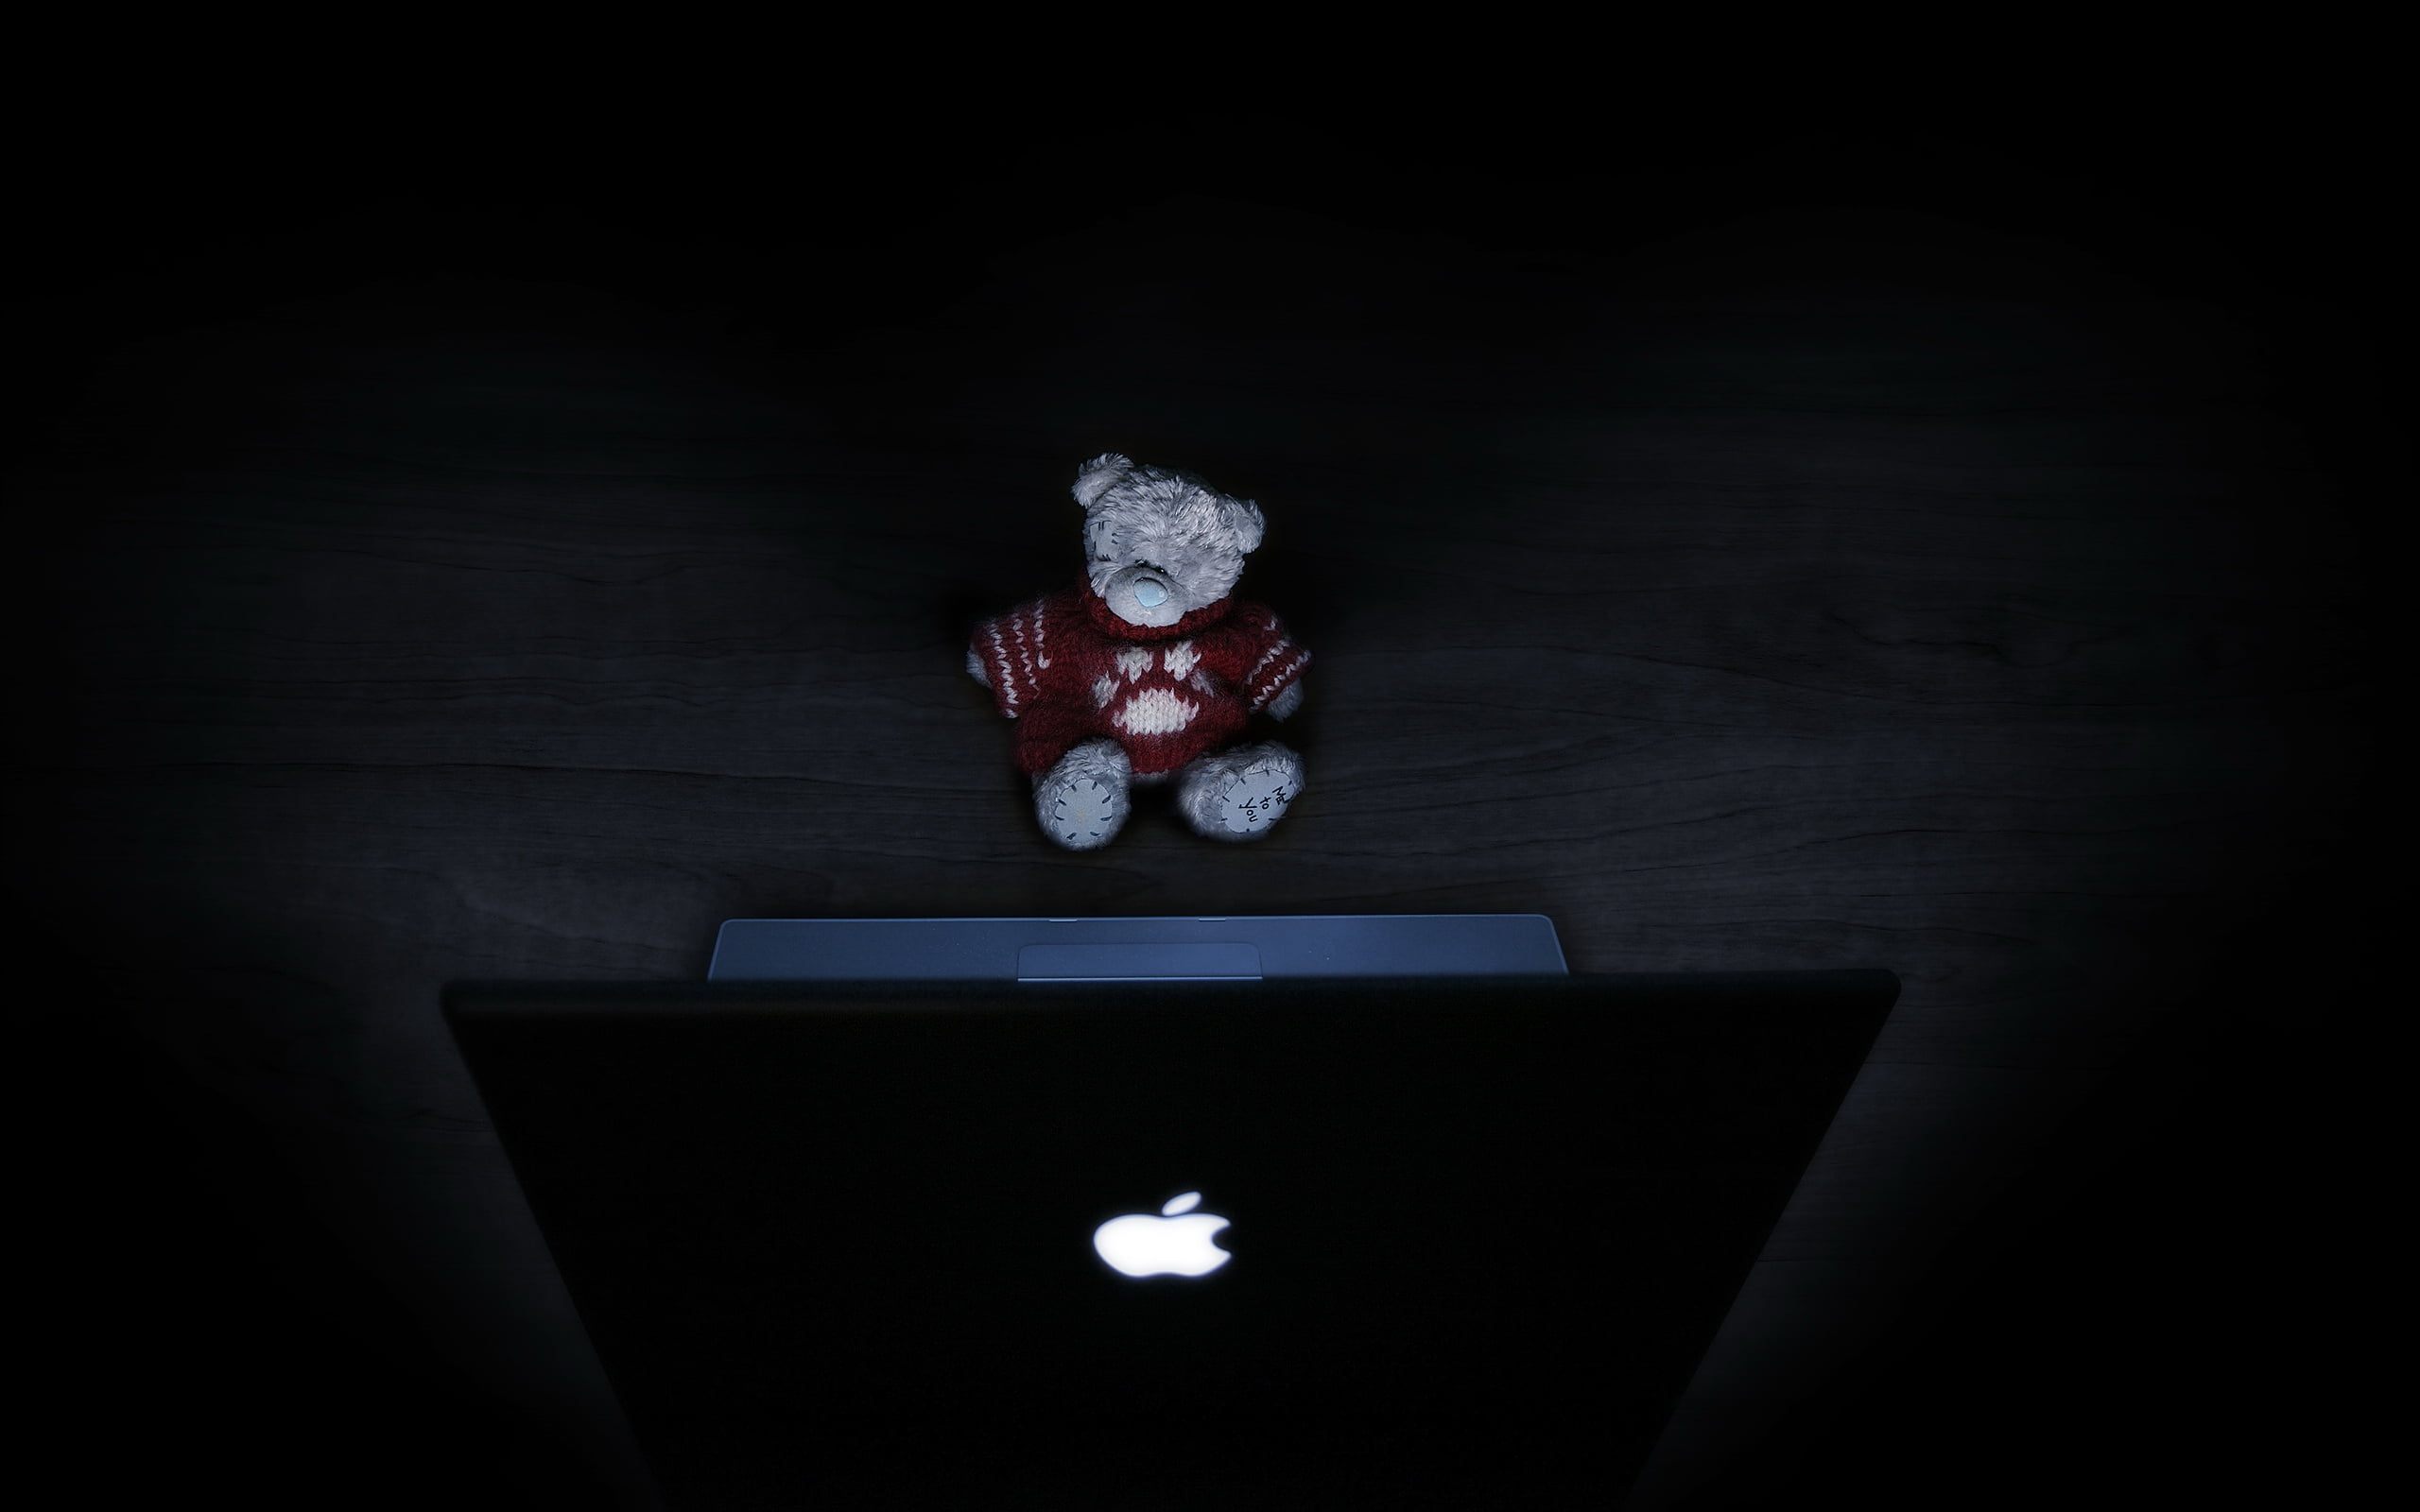 grey teddy bear in front of silver MacBook